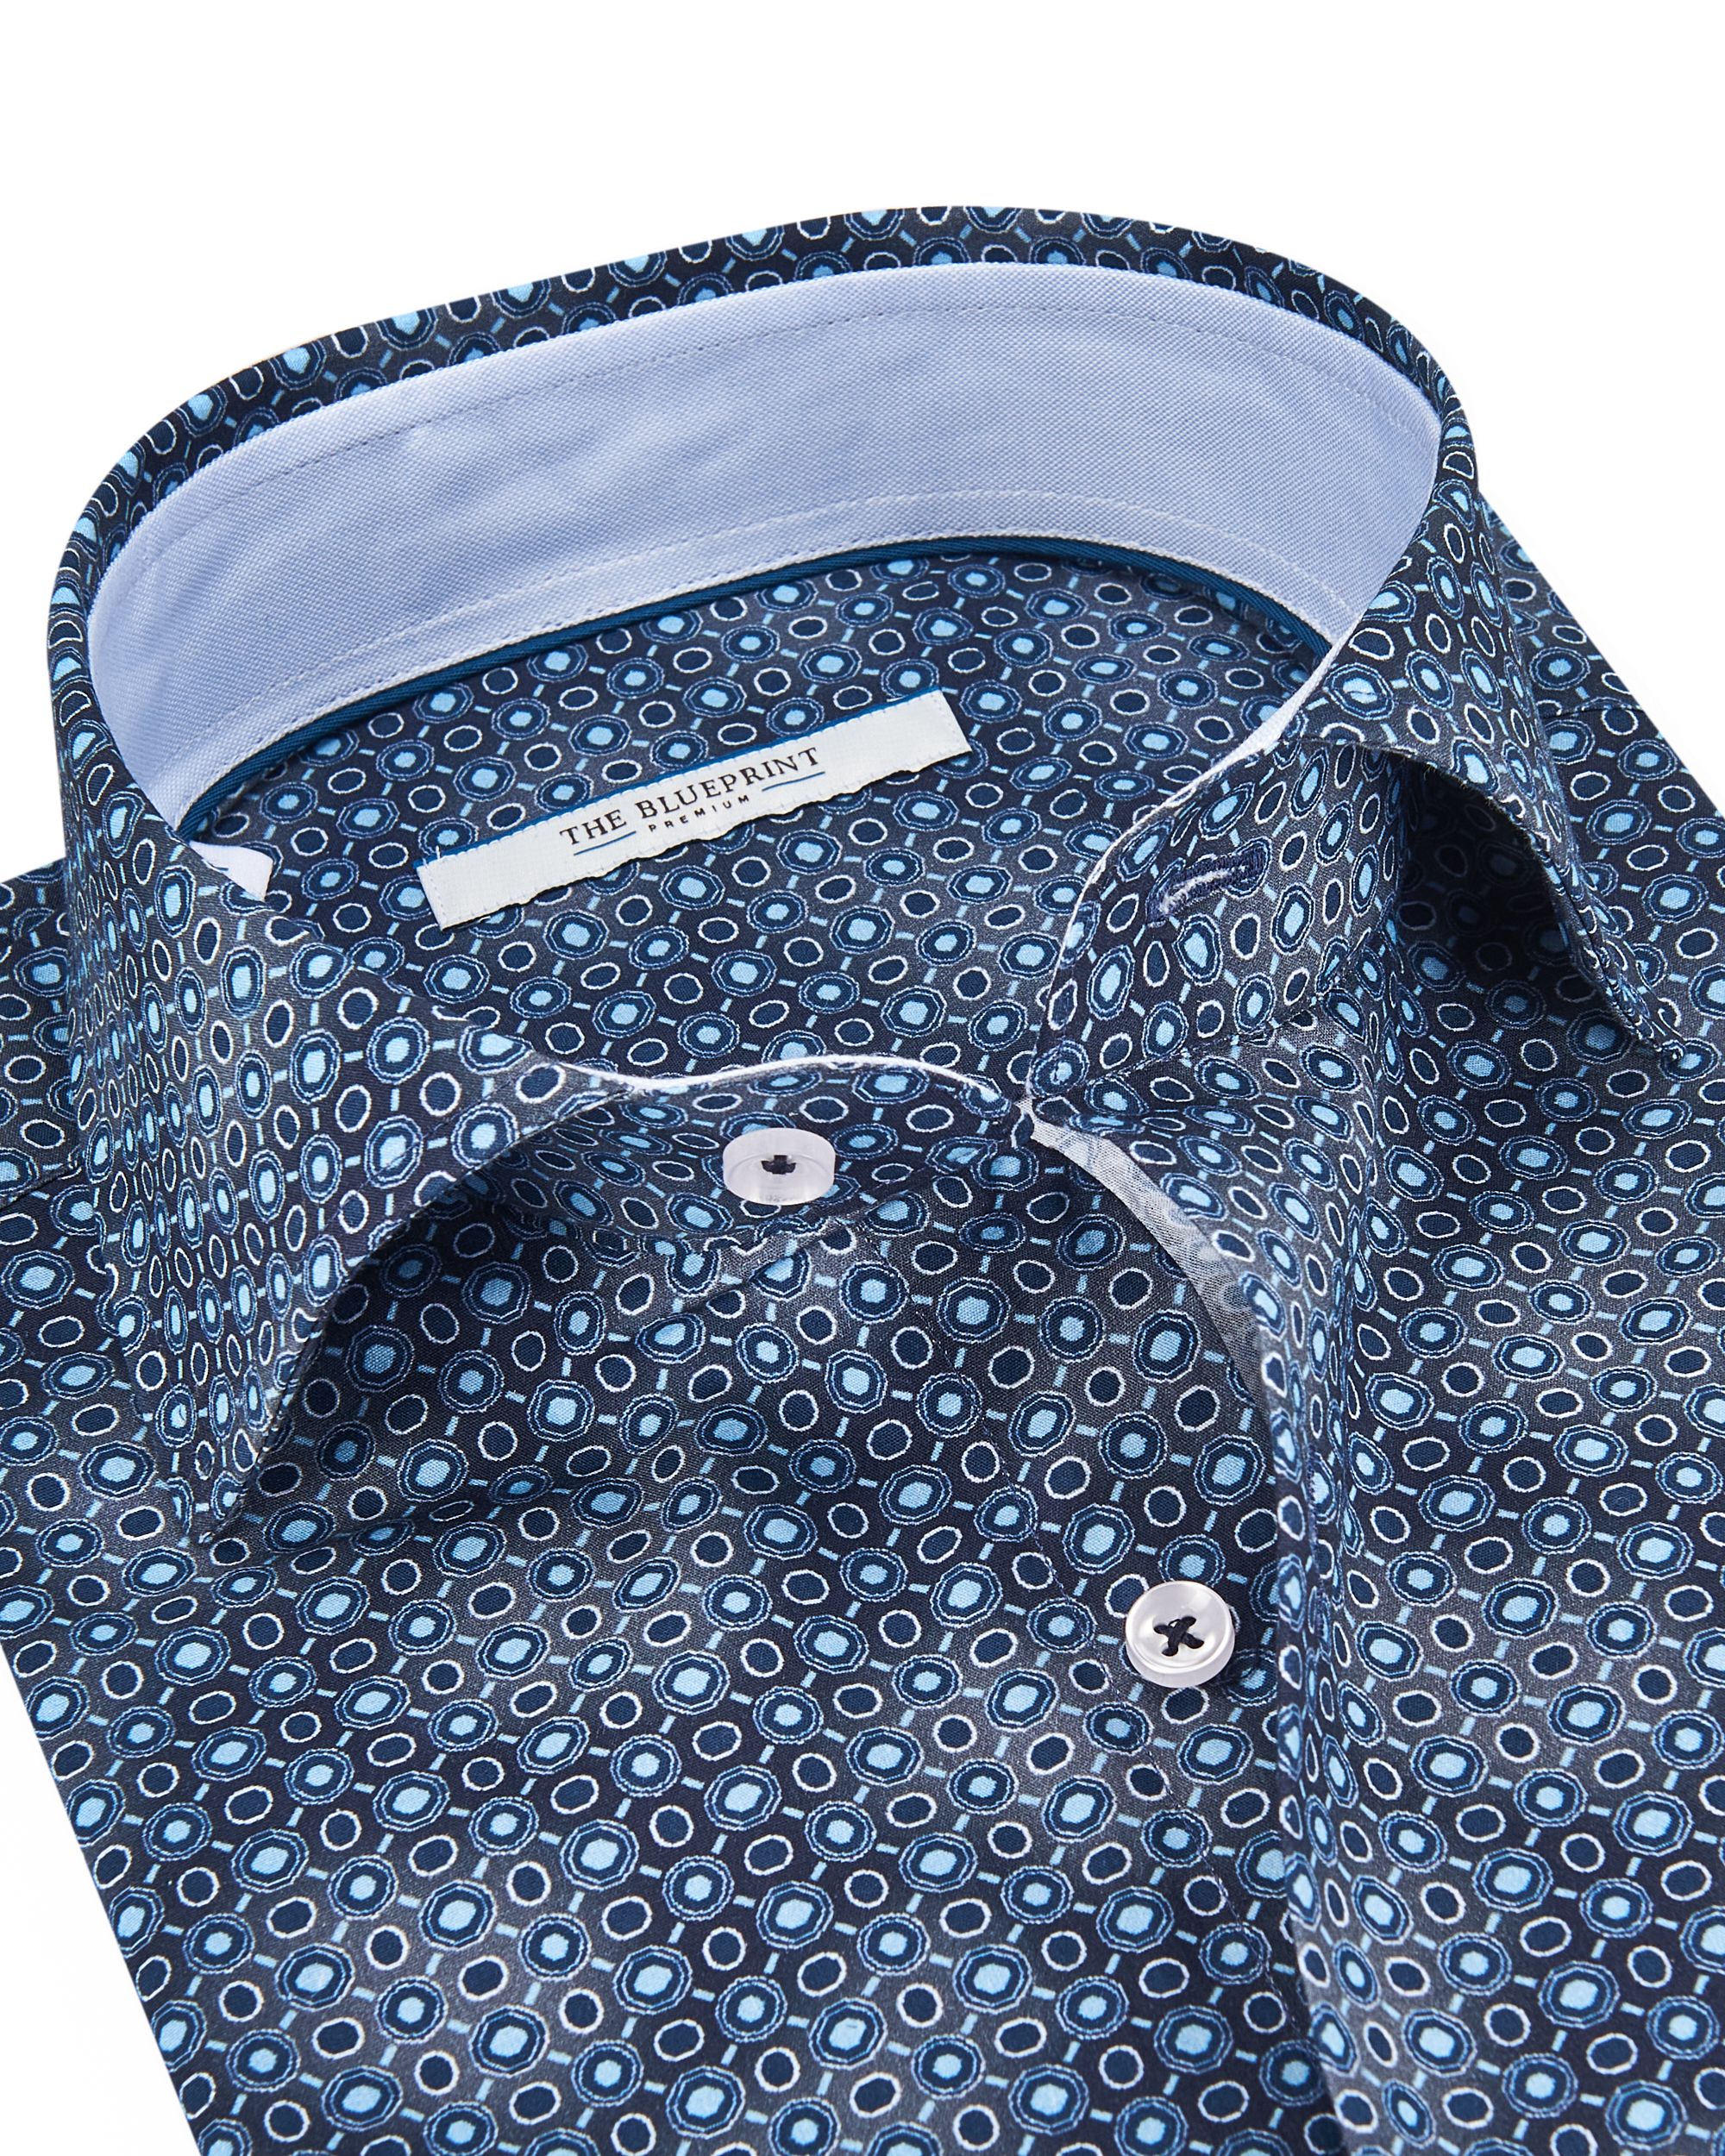 The BLUEPRINT Premium Trendy overhemd LM Blauw dessin 084496-001-L